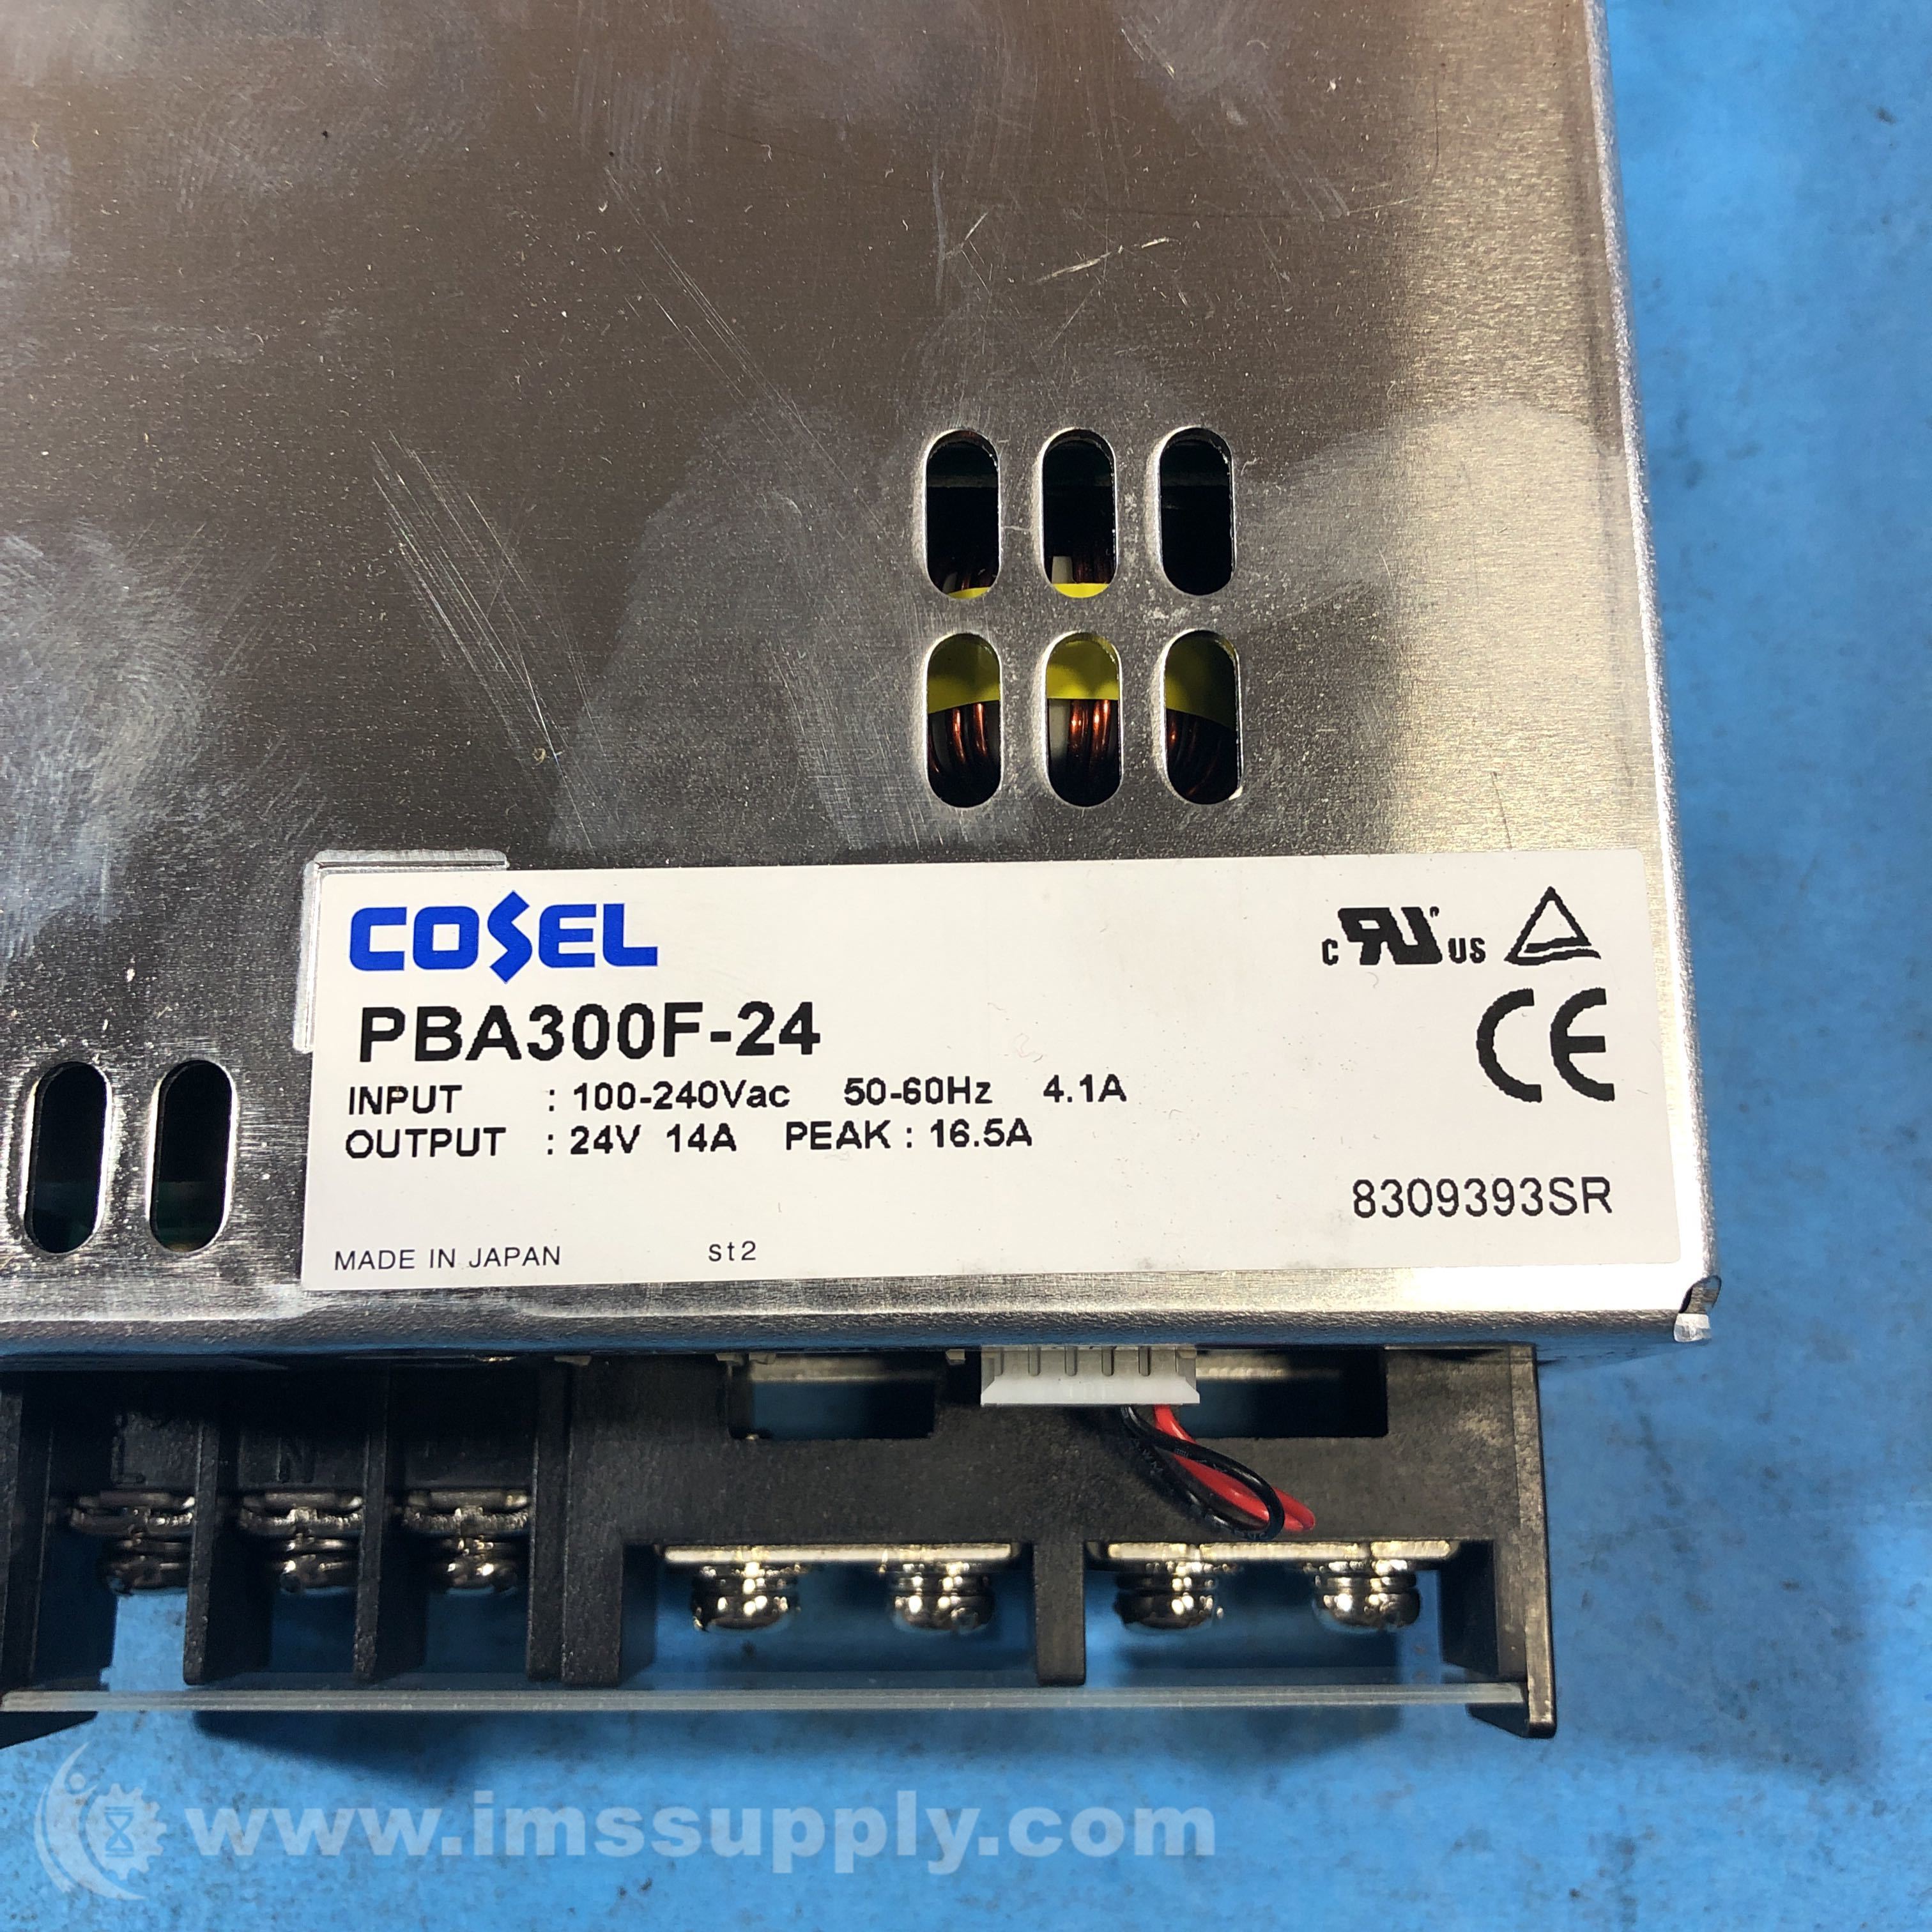 Cosel Pba300f-24 DC Swotcjomg Power Supply 24v 14a for sale online 